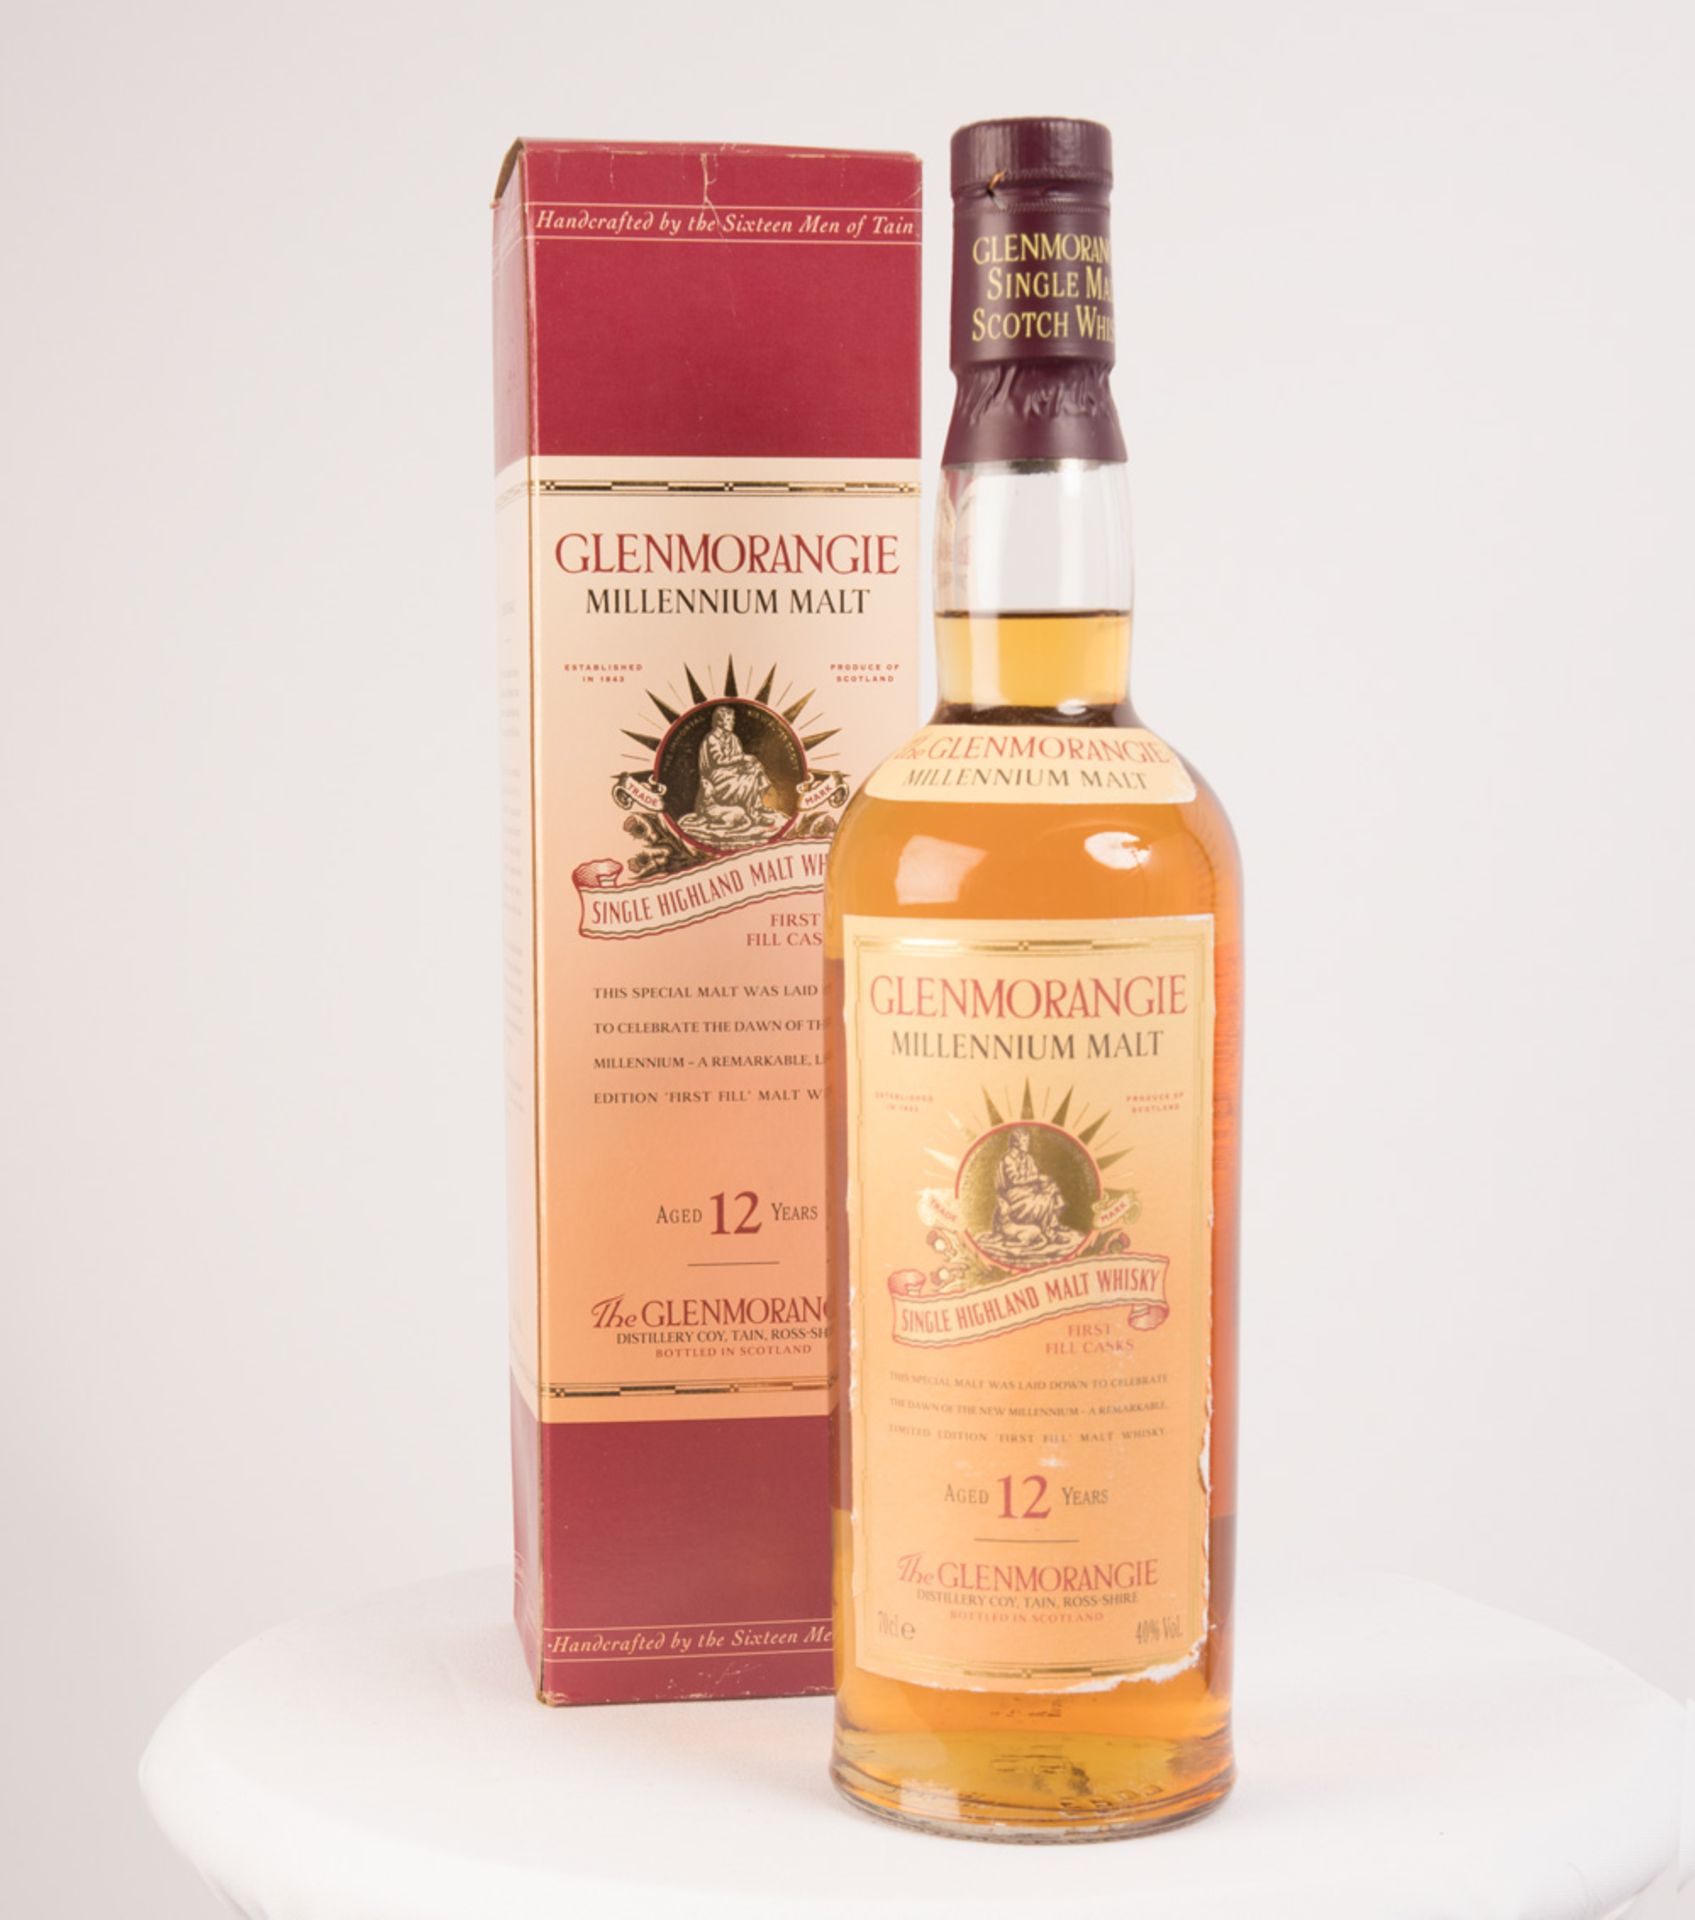 GLENMORANGIE 12 YO MILLENIUM MALT Single Highland malt whisky. First Fill Casks. This special malt